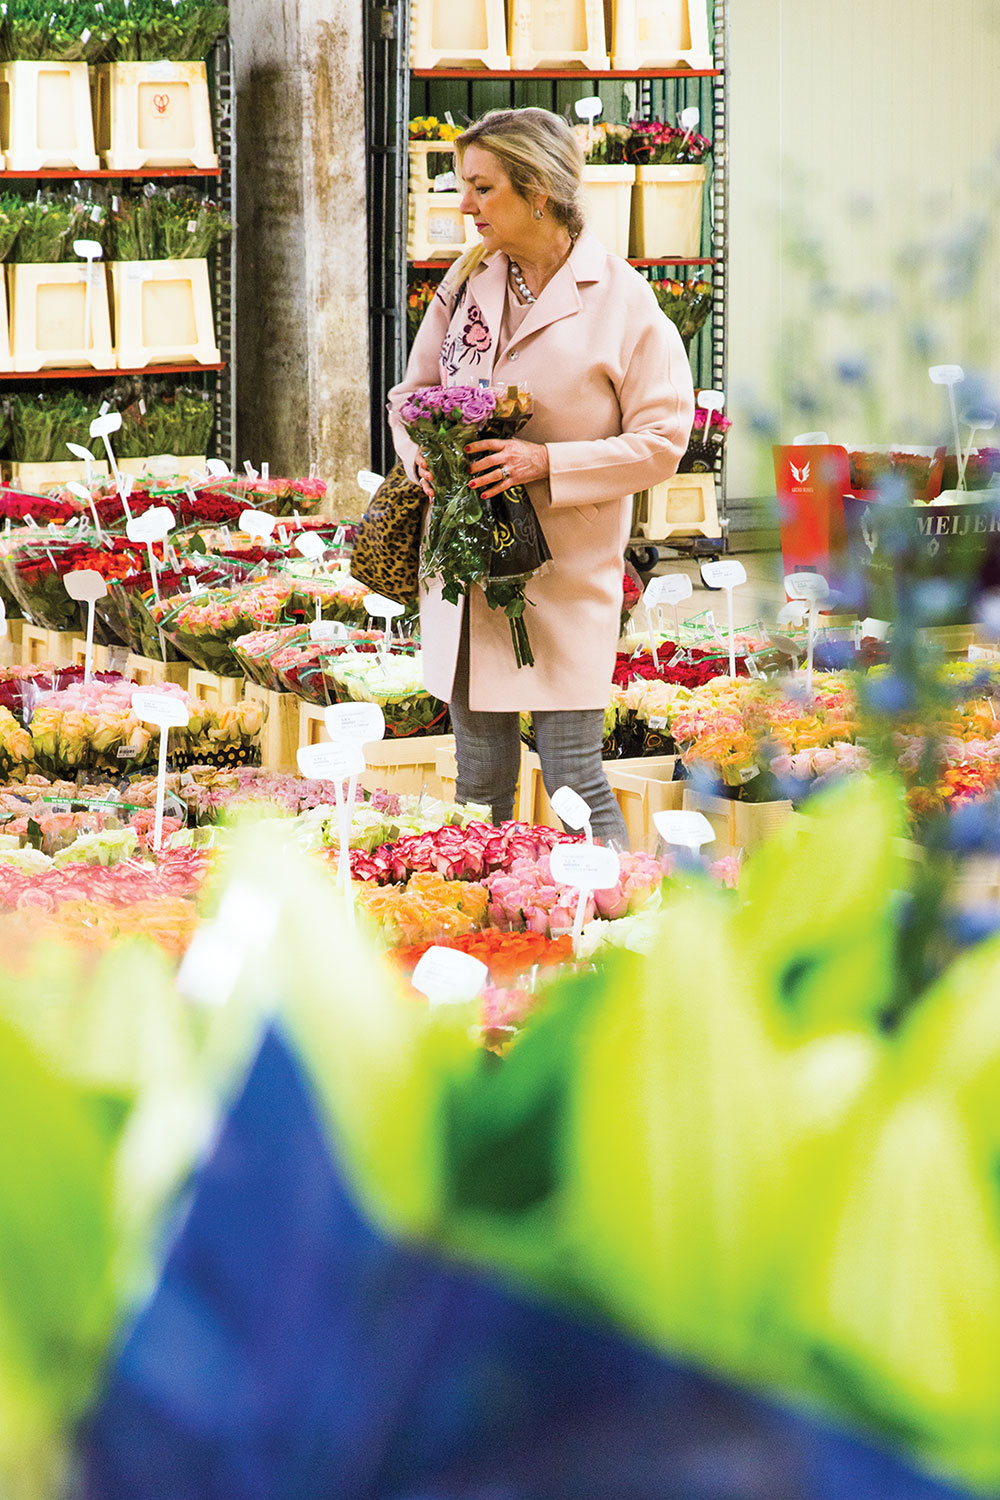 Laura Dowling shopping at the Marche de Rungis, Paris flower market